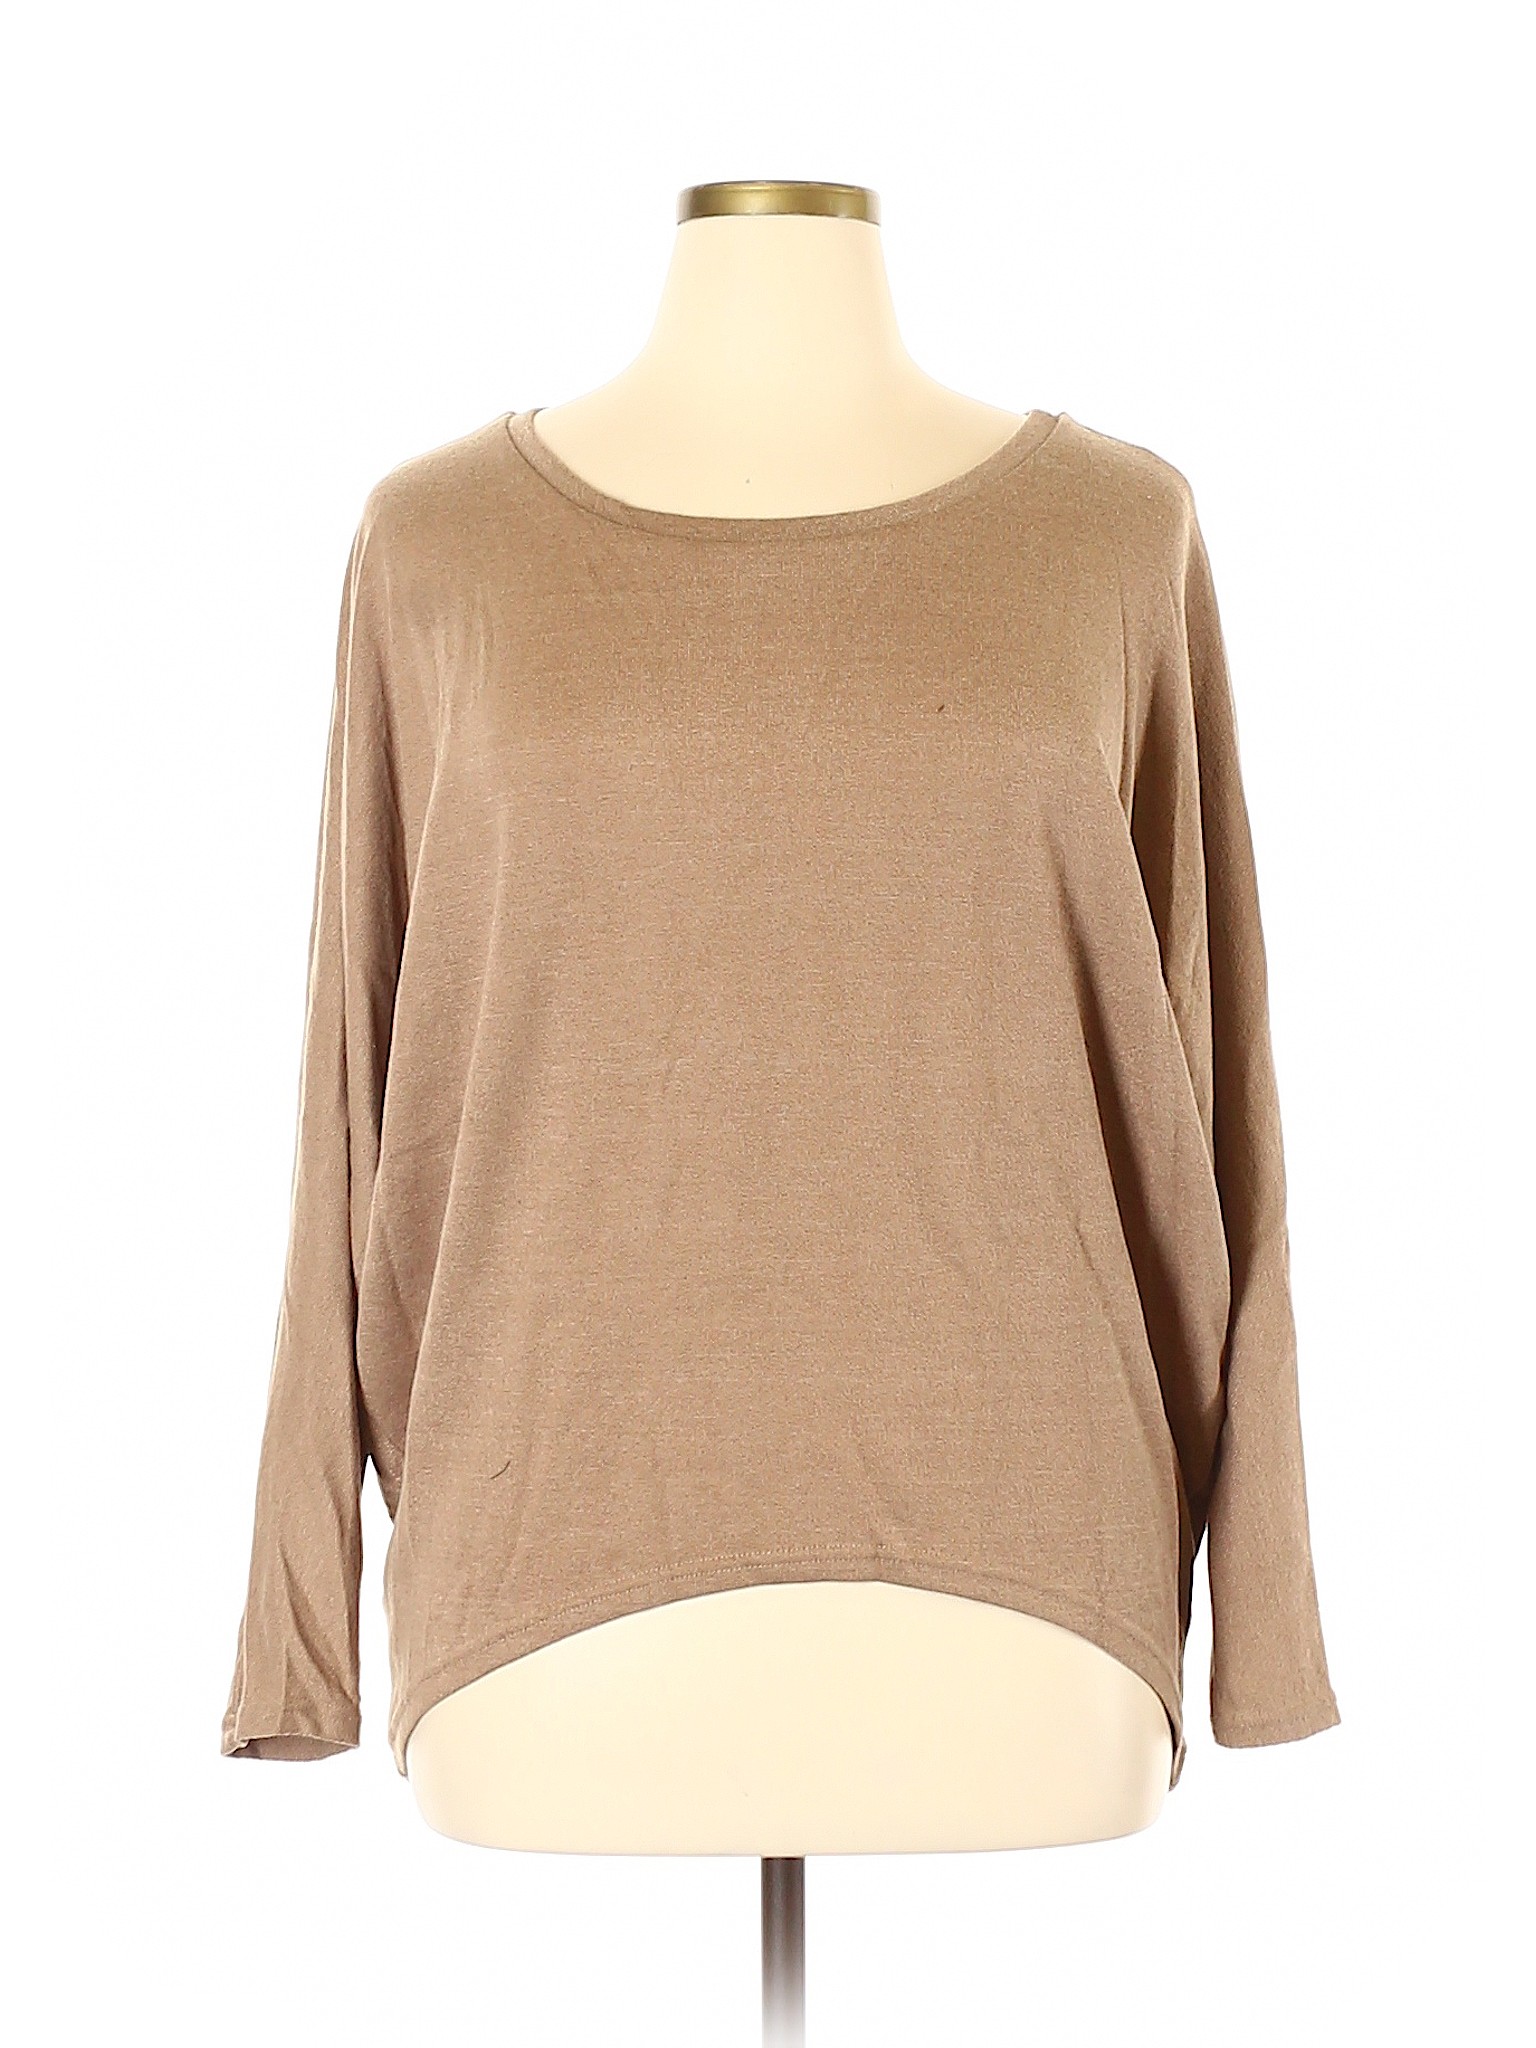 NWT Zanzea Collection Women Brown Pullover Sweater 12 | eBay